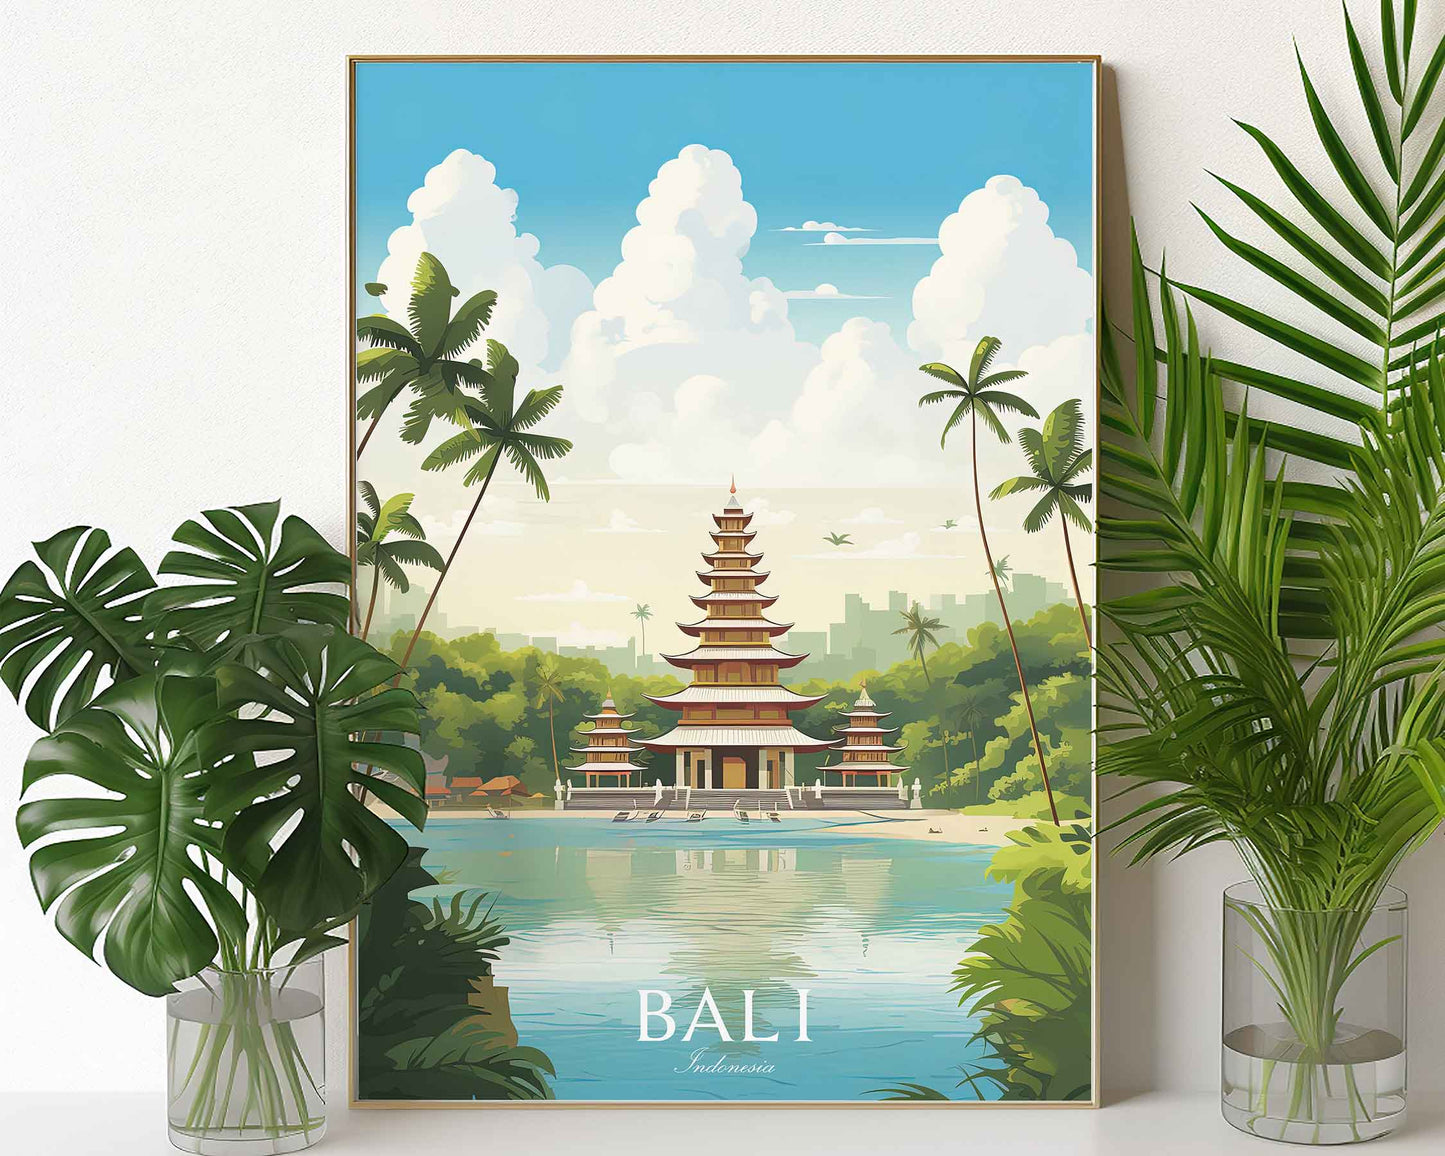 Framed Image of Bali Indonesia Wall Art Travel Poster Prints Illustration